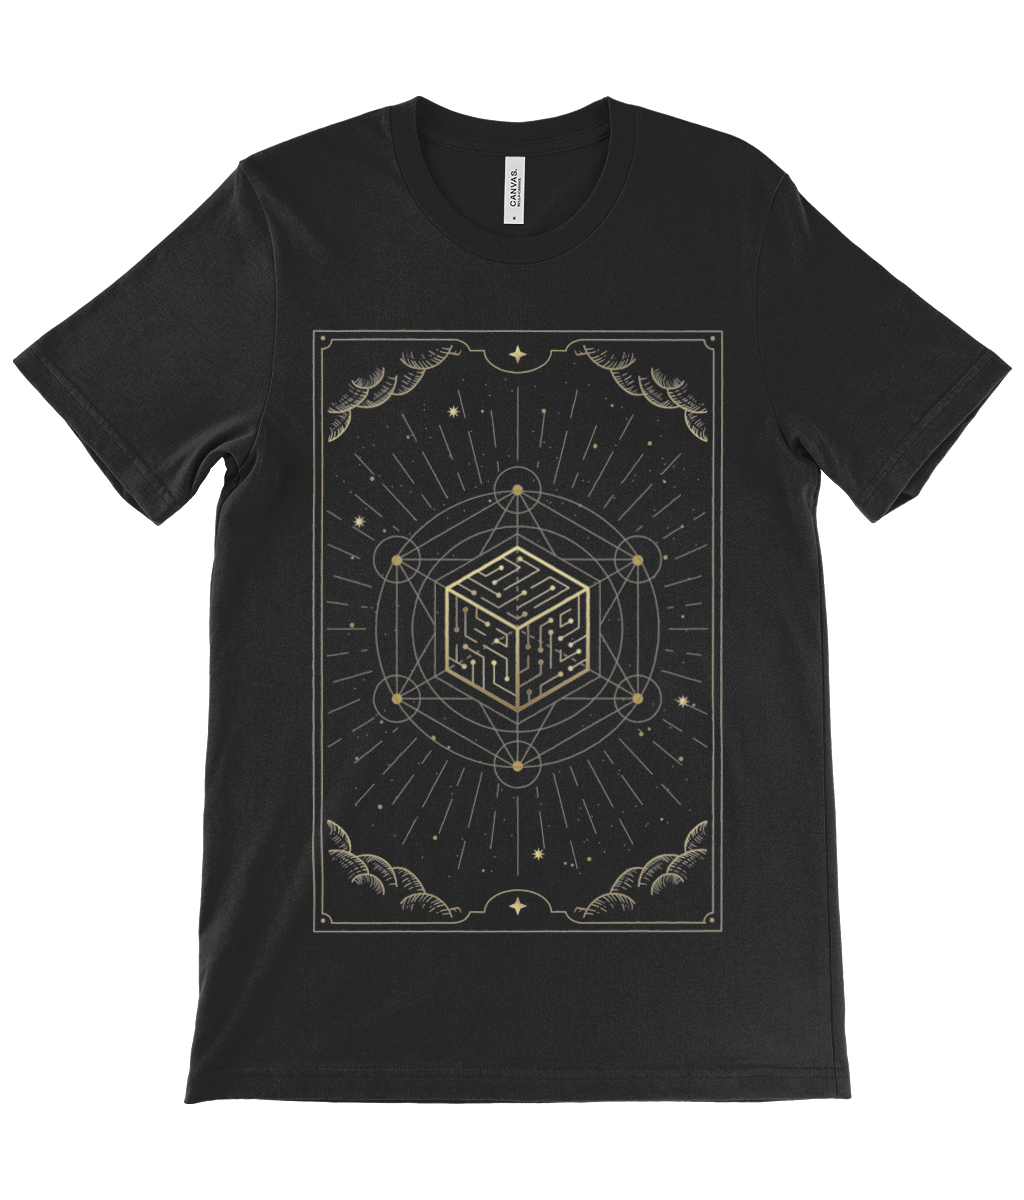 Puzzle Cube Tarot Style Crew Neck T-Shirt